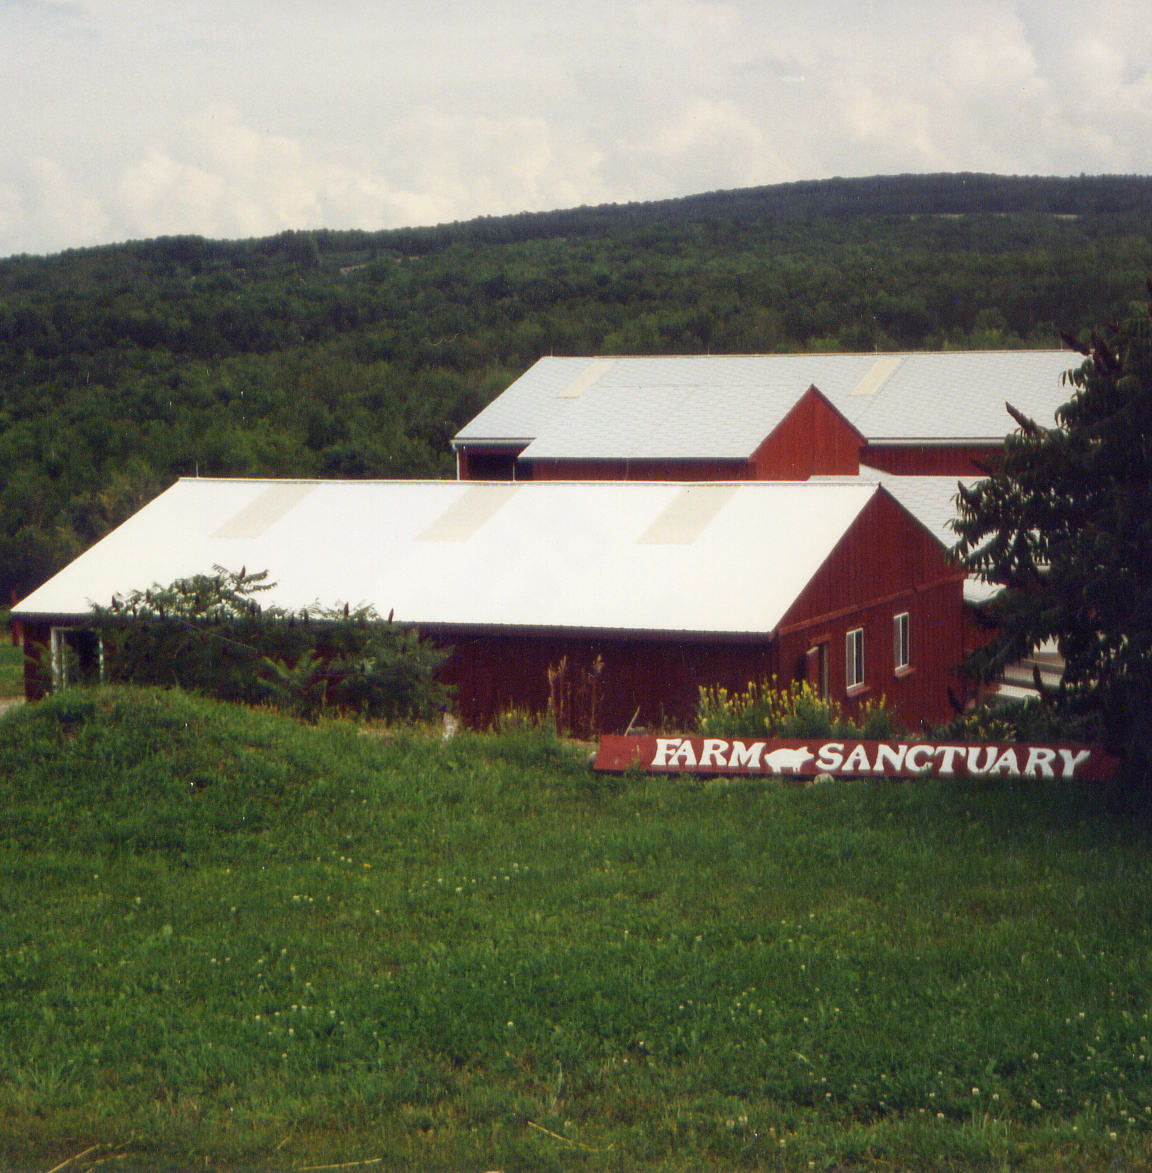 Watkins Glen Sanctuary